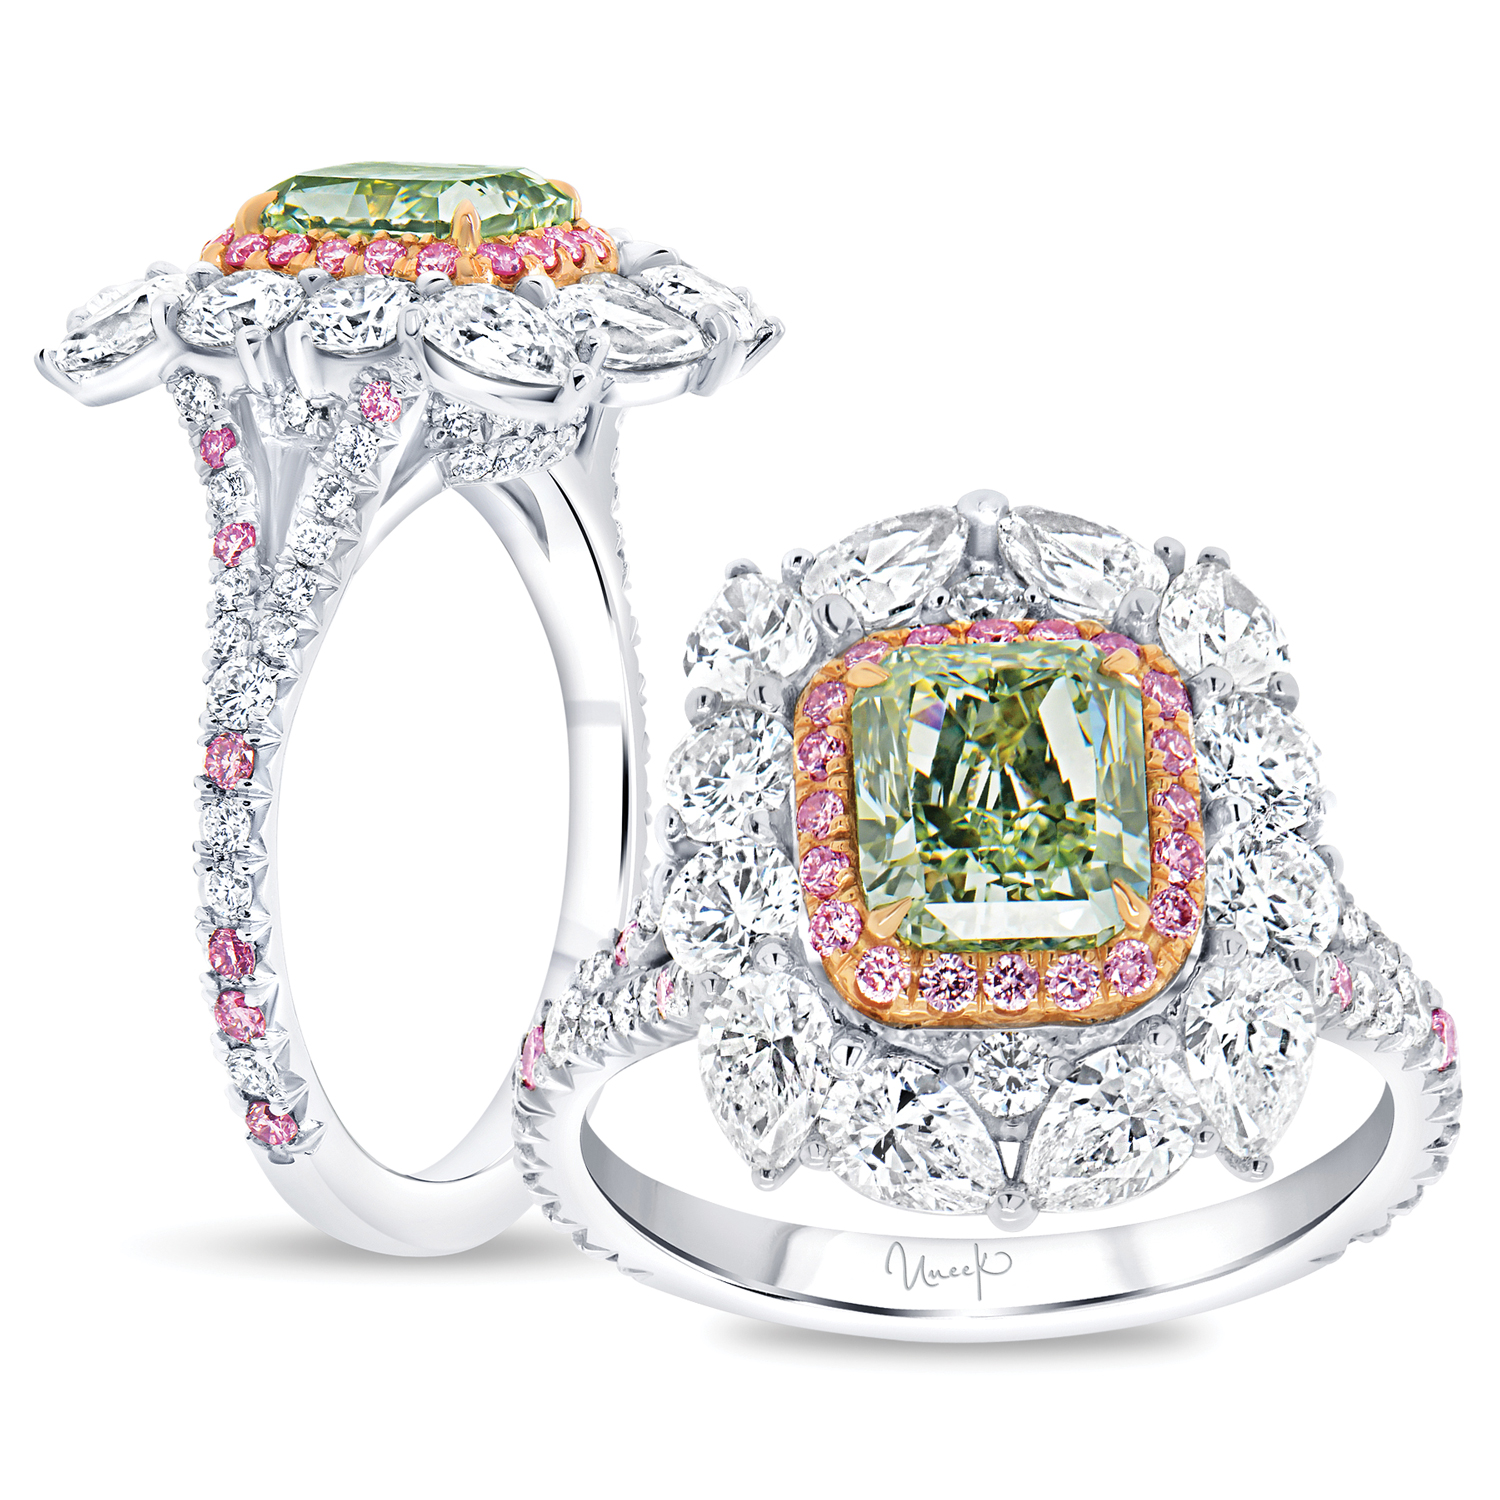 INSTORE Design Awards 2023 – Colored Diamond Jewelry